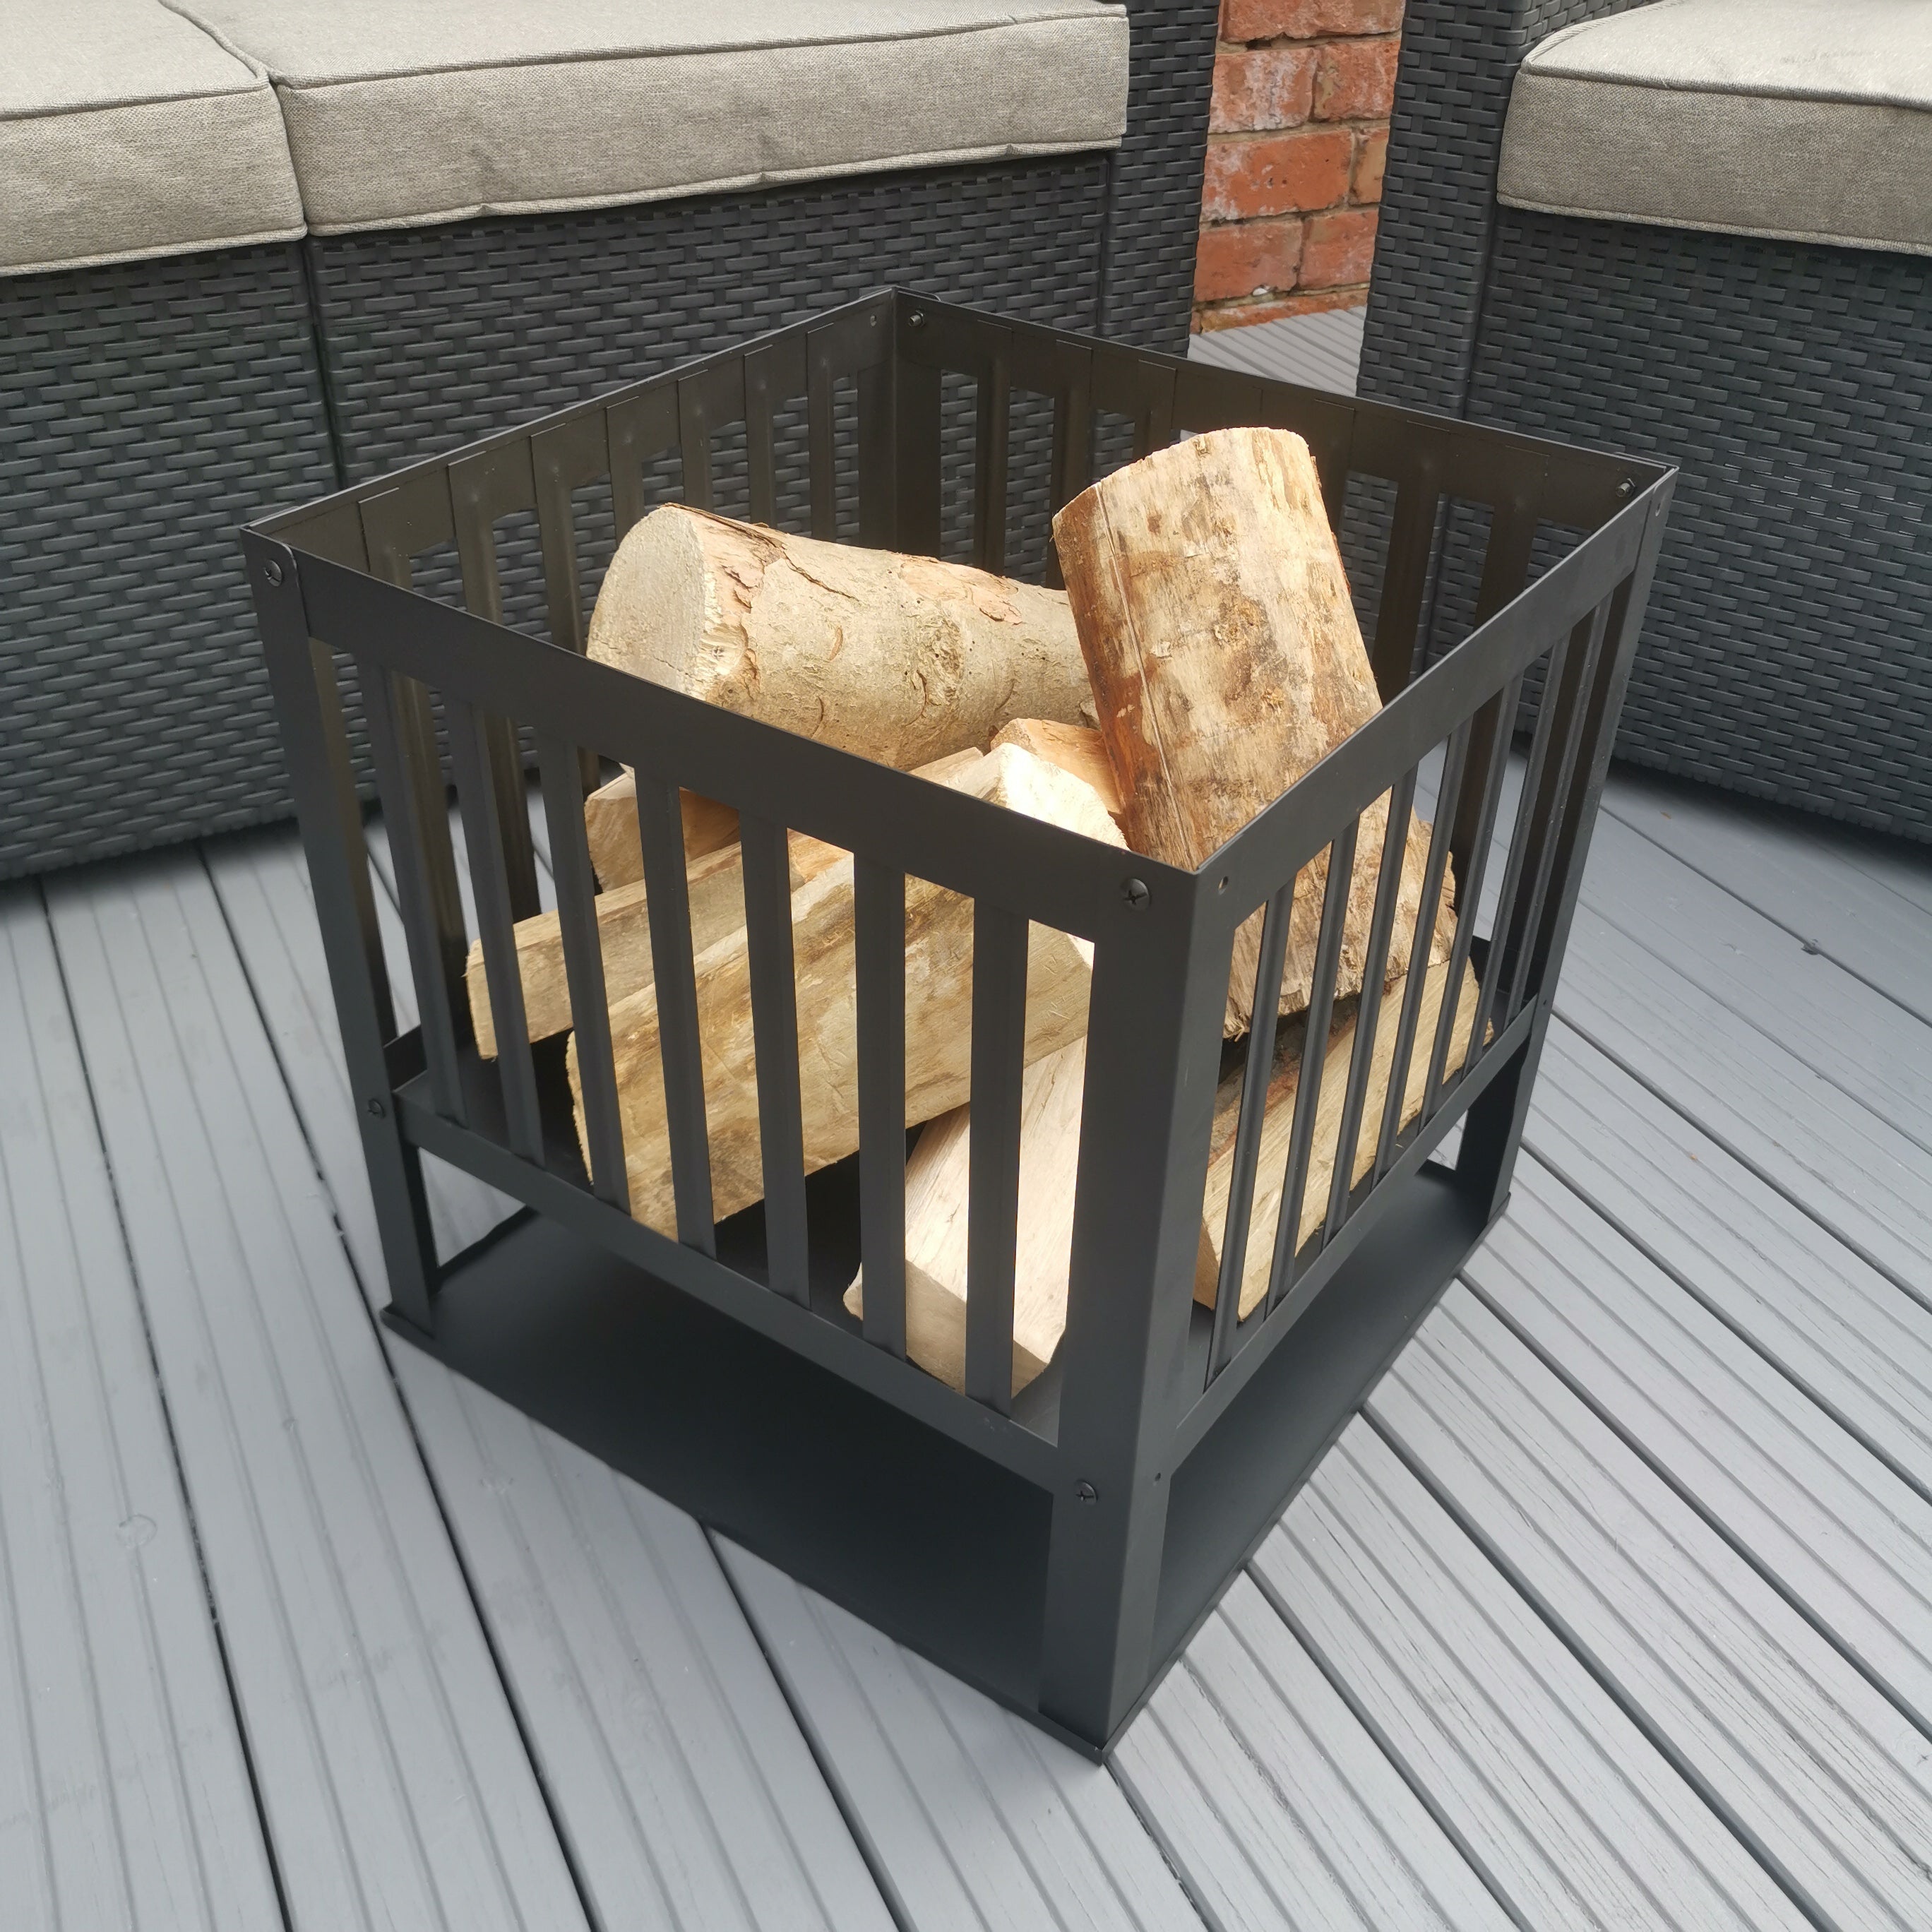 40cm Square Fire Pit Basket Garden Patio Wood Solid Fuel Burner